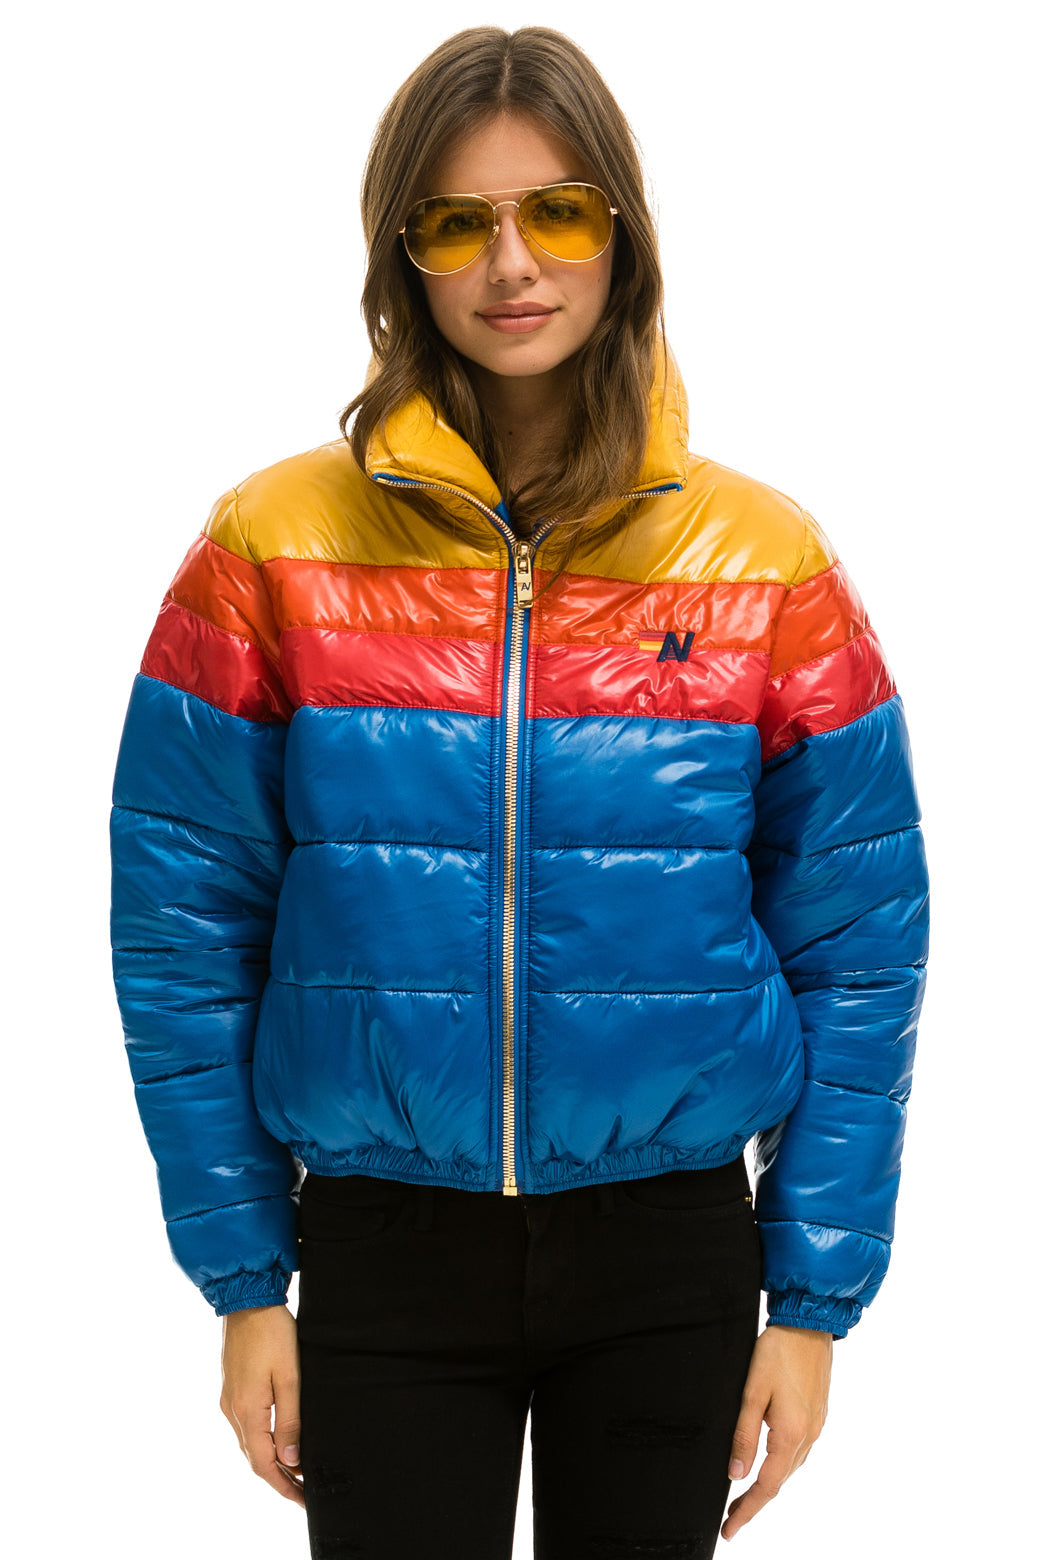 Vintage 1970's Ski Jacket - SKYR blue rainbow striped - women's size  small/xs